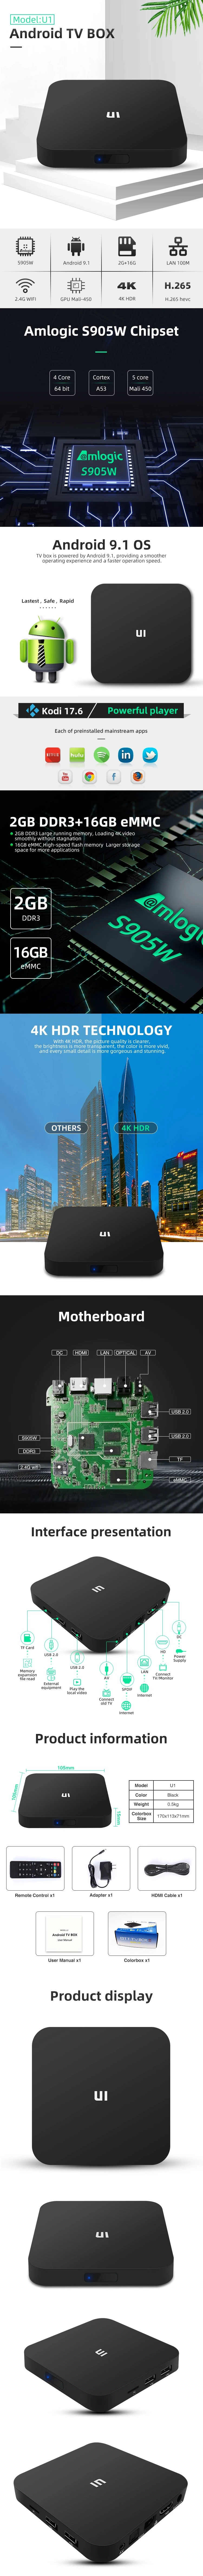 Amlogic 905W Smart Set Top Box Android TV Box